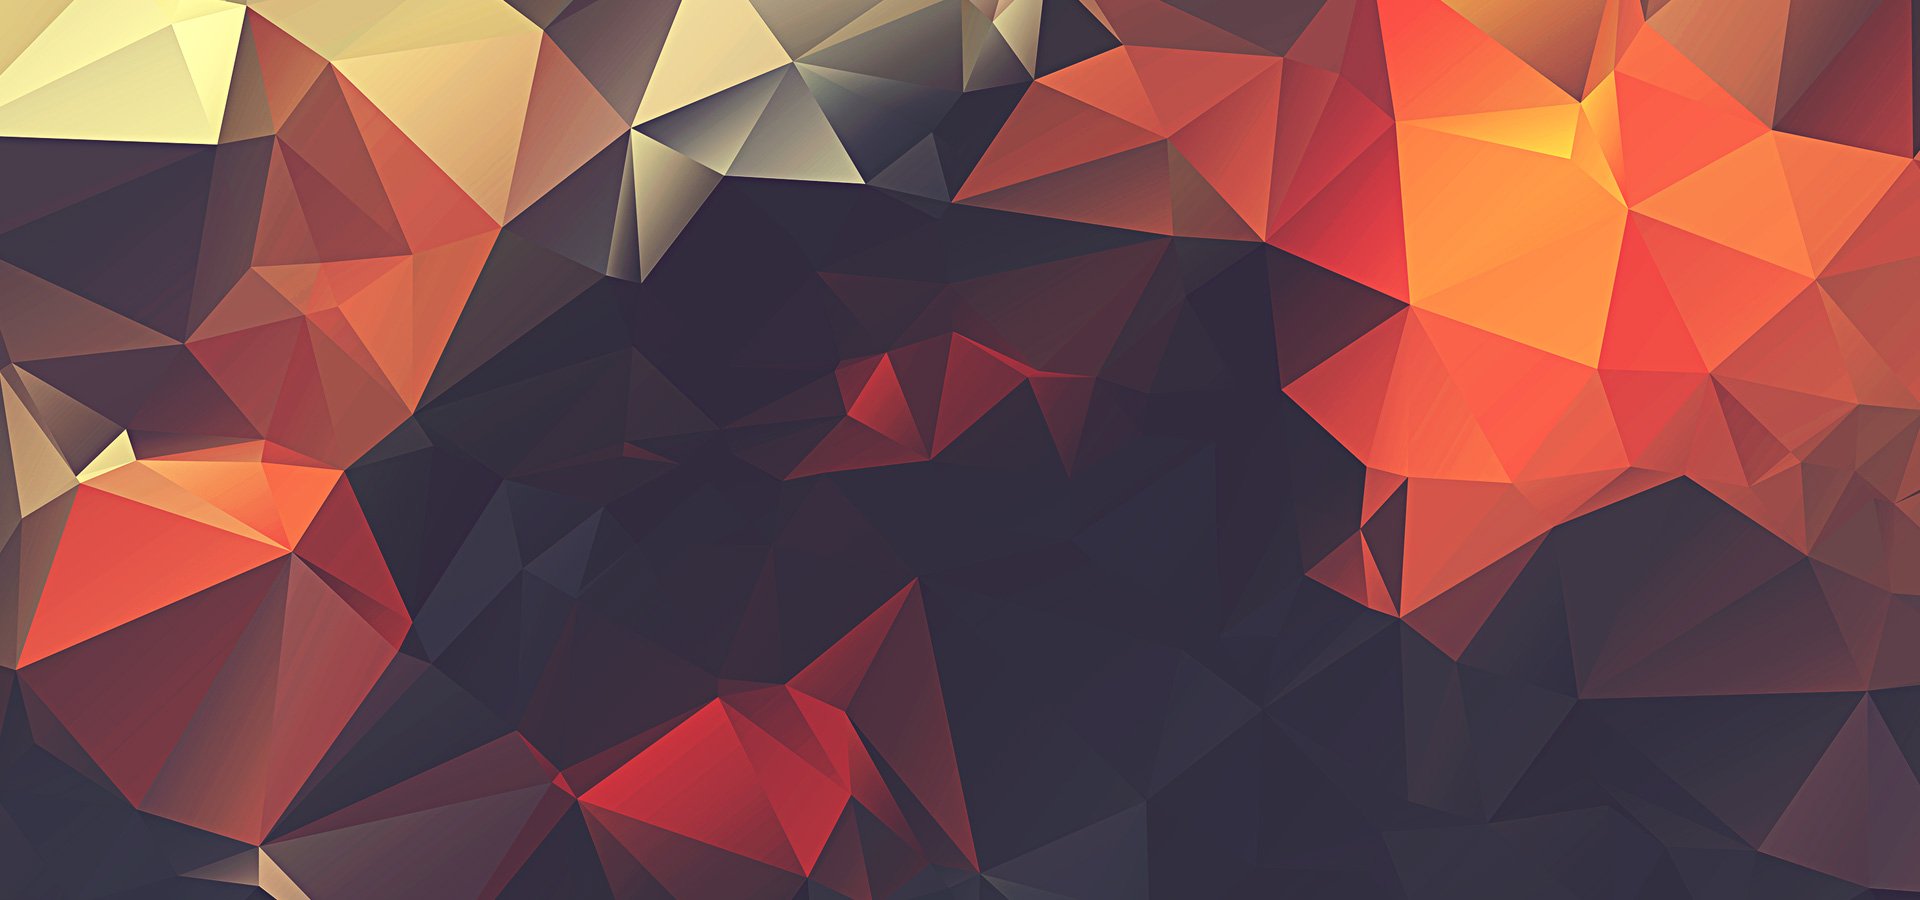 20+ Polygon Backgrounds | Free & Premium Templates1920 x 900